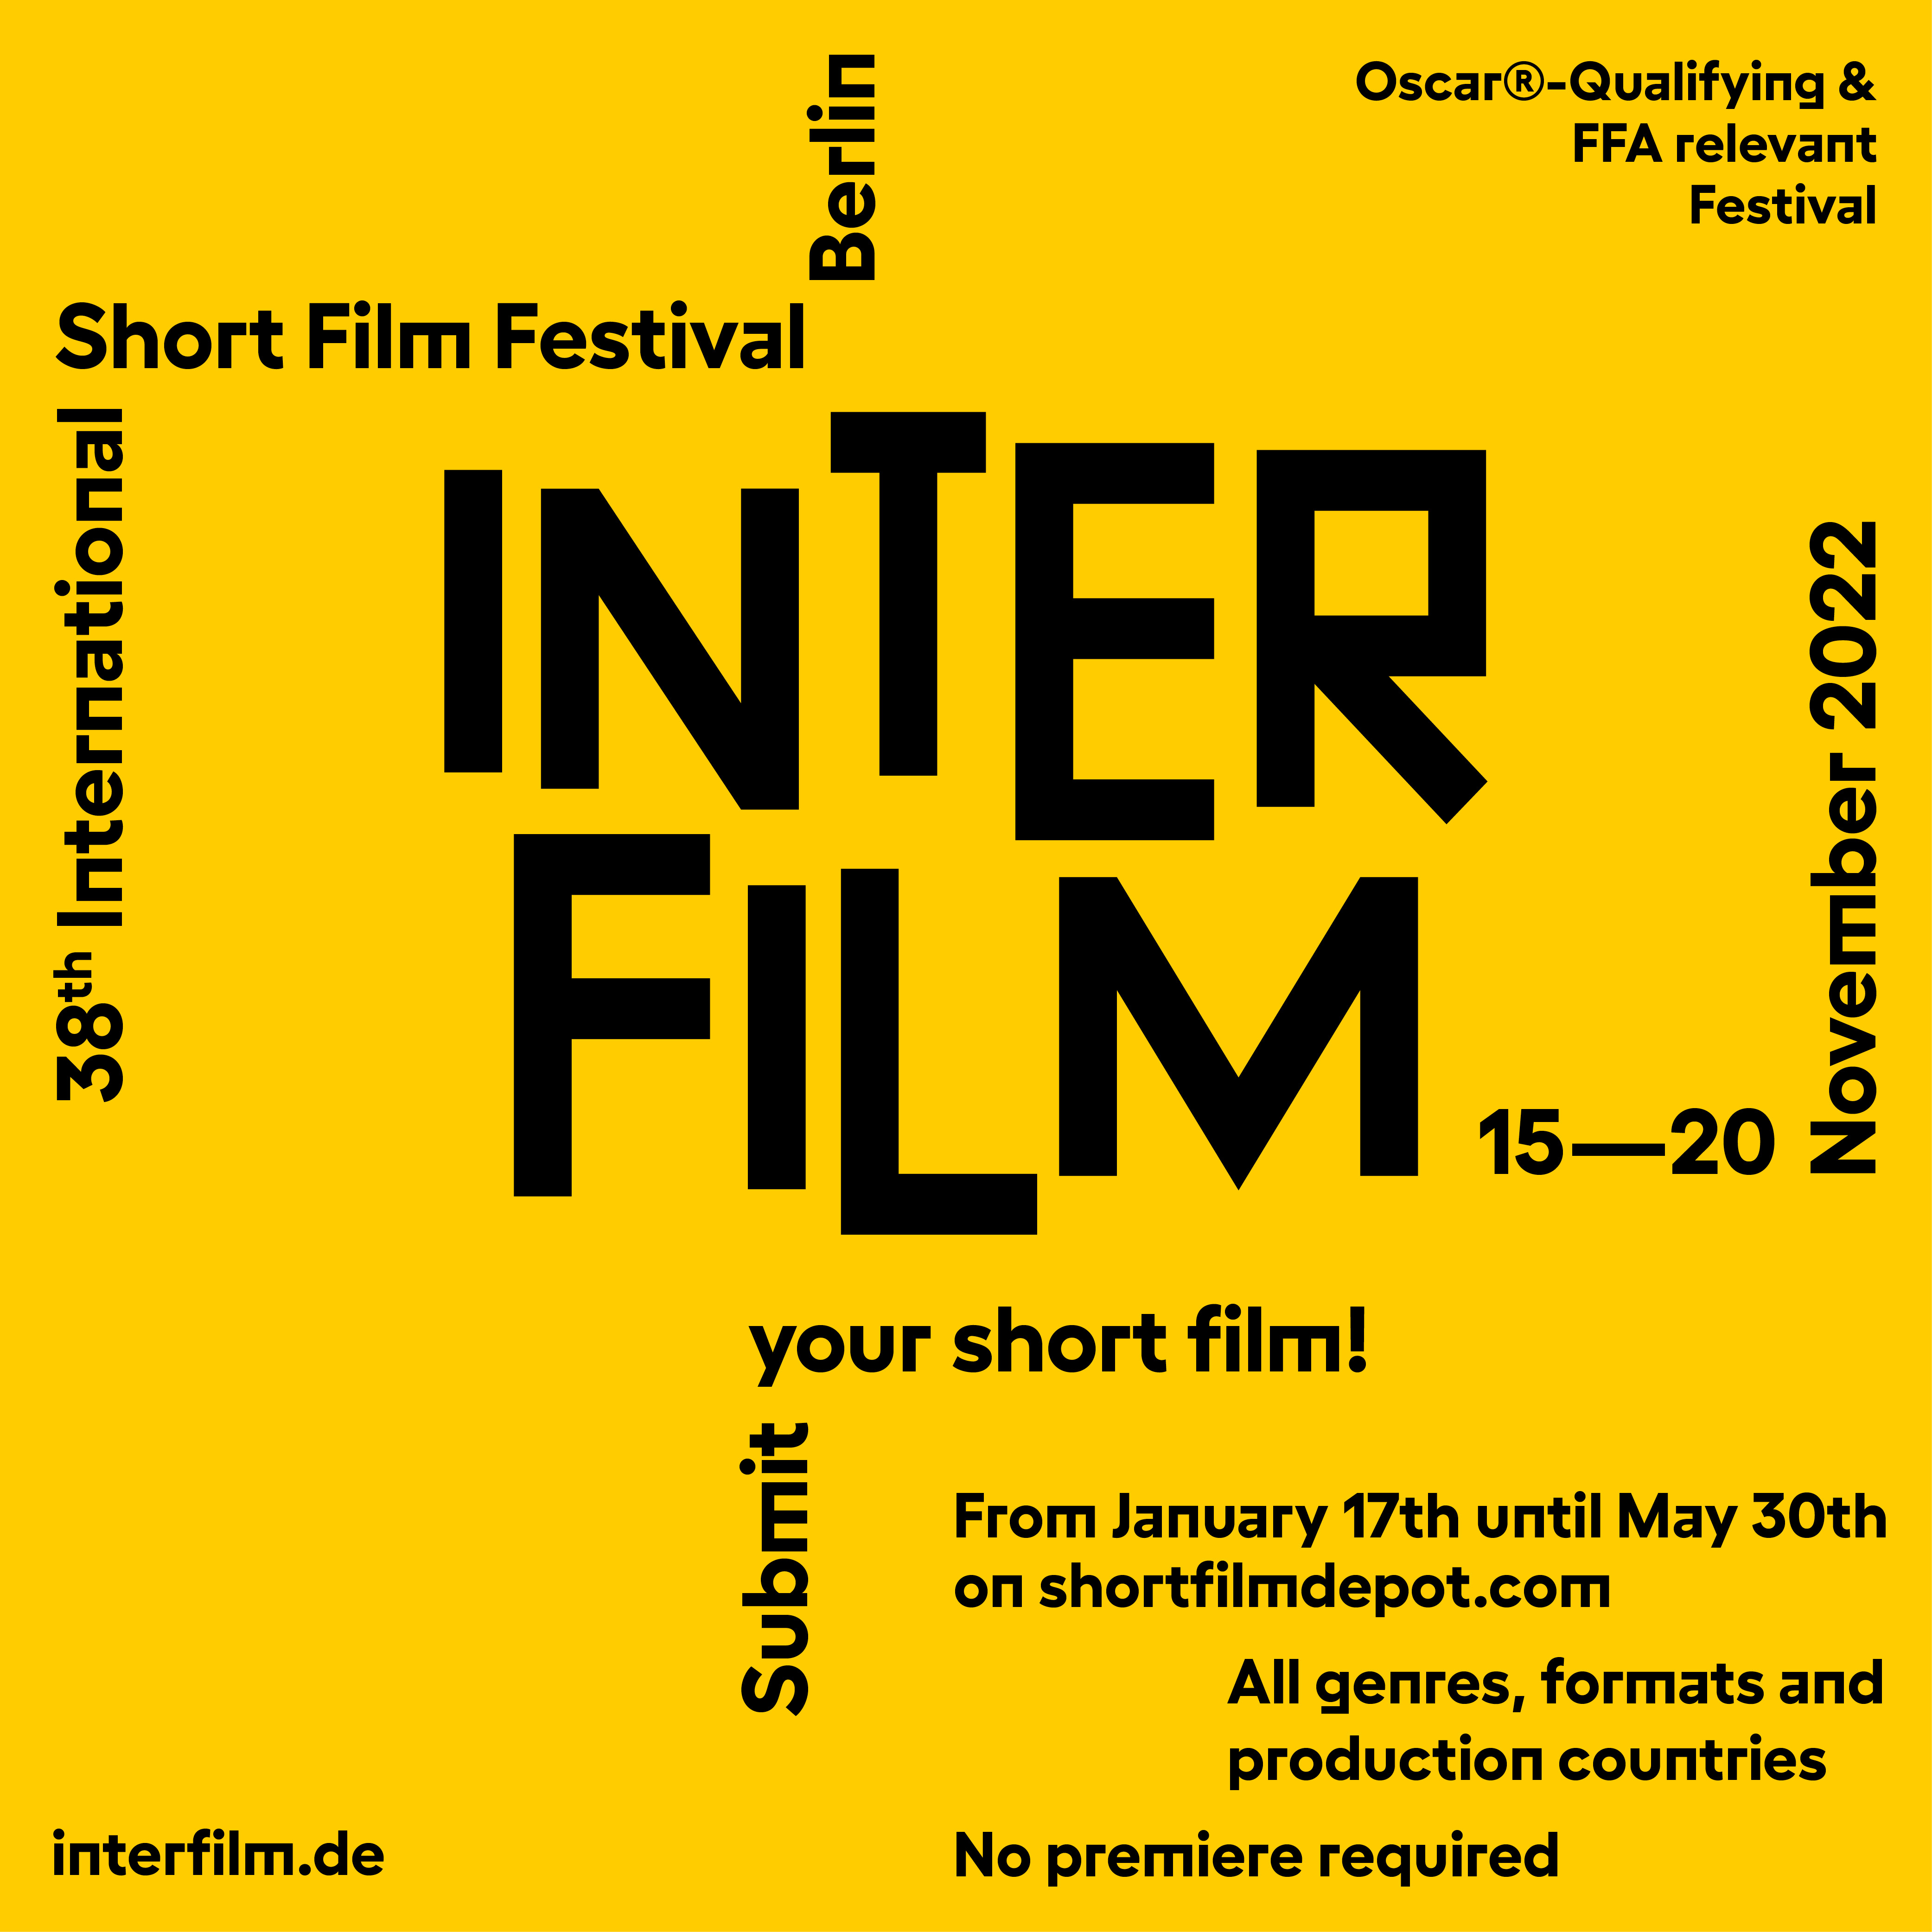 Submit films at interfilm | interfilm Berlin